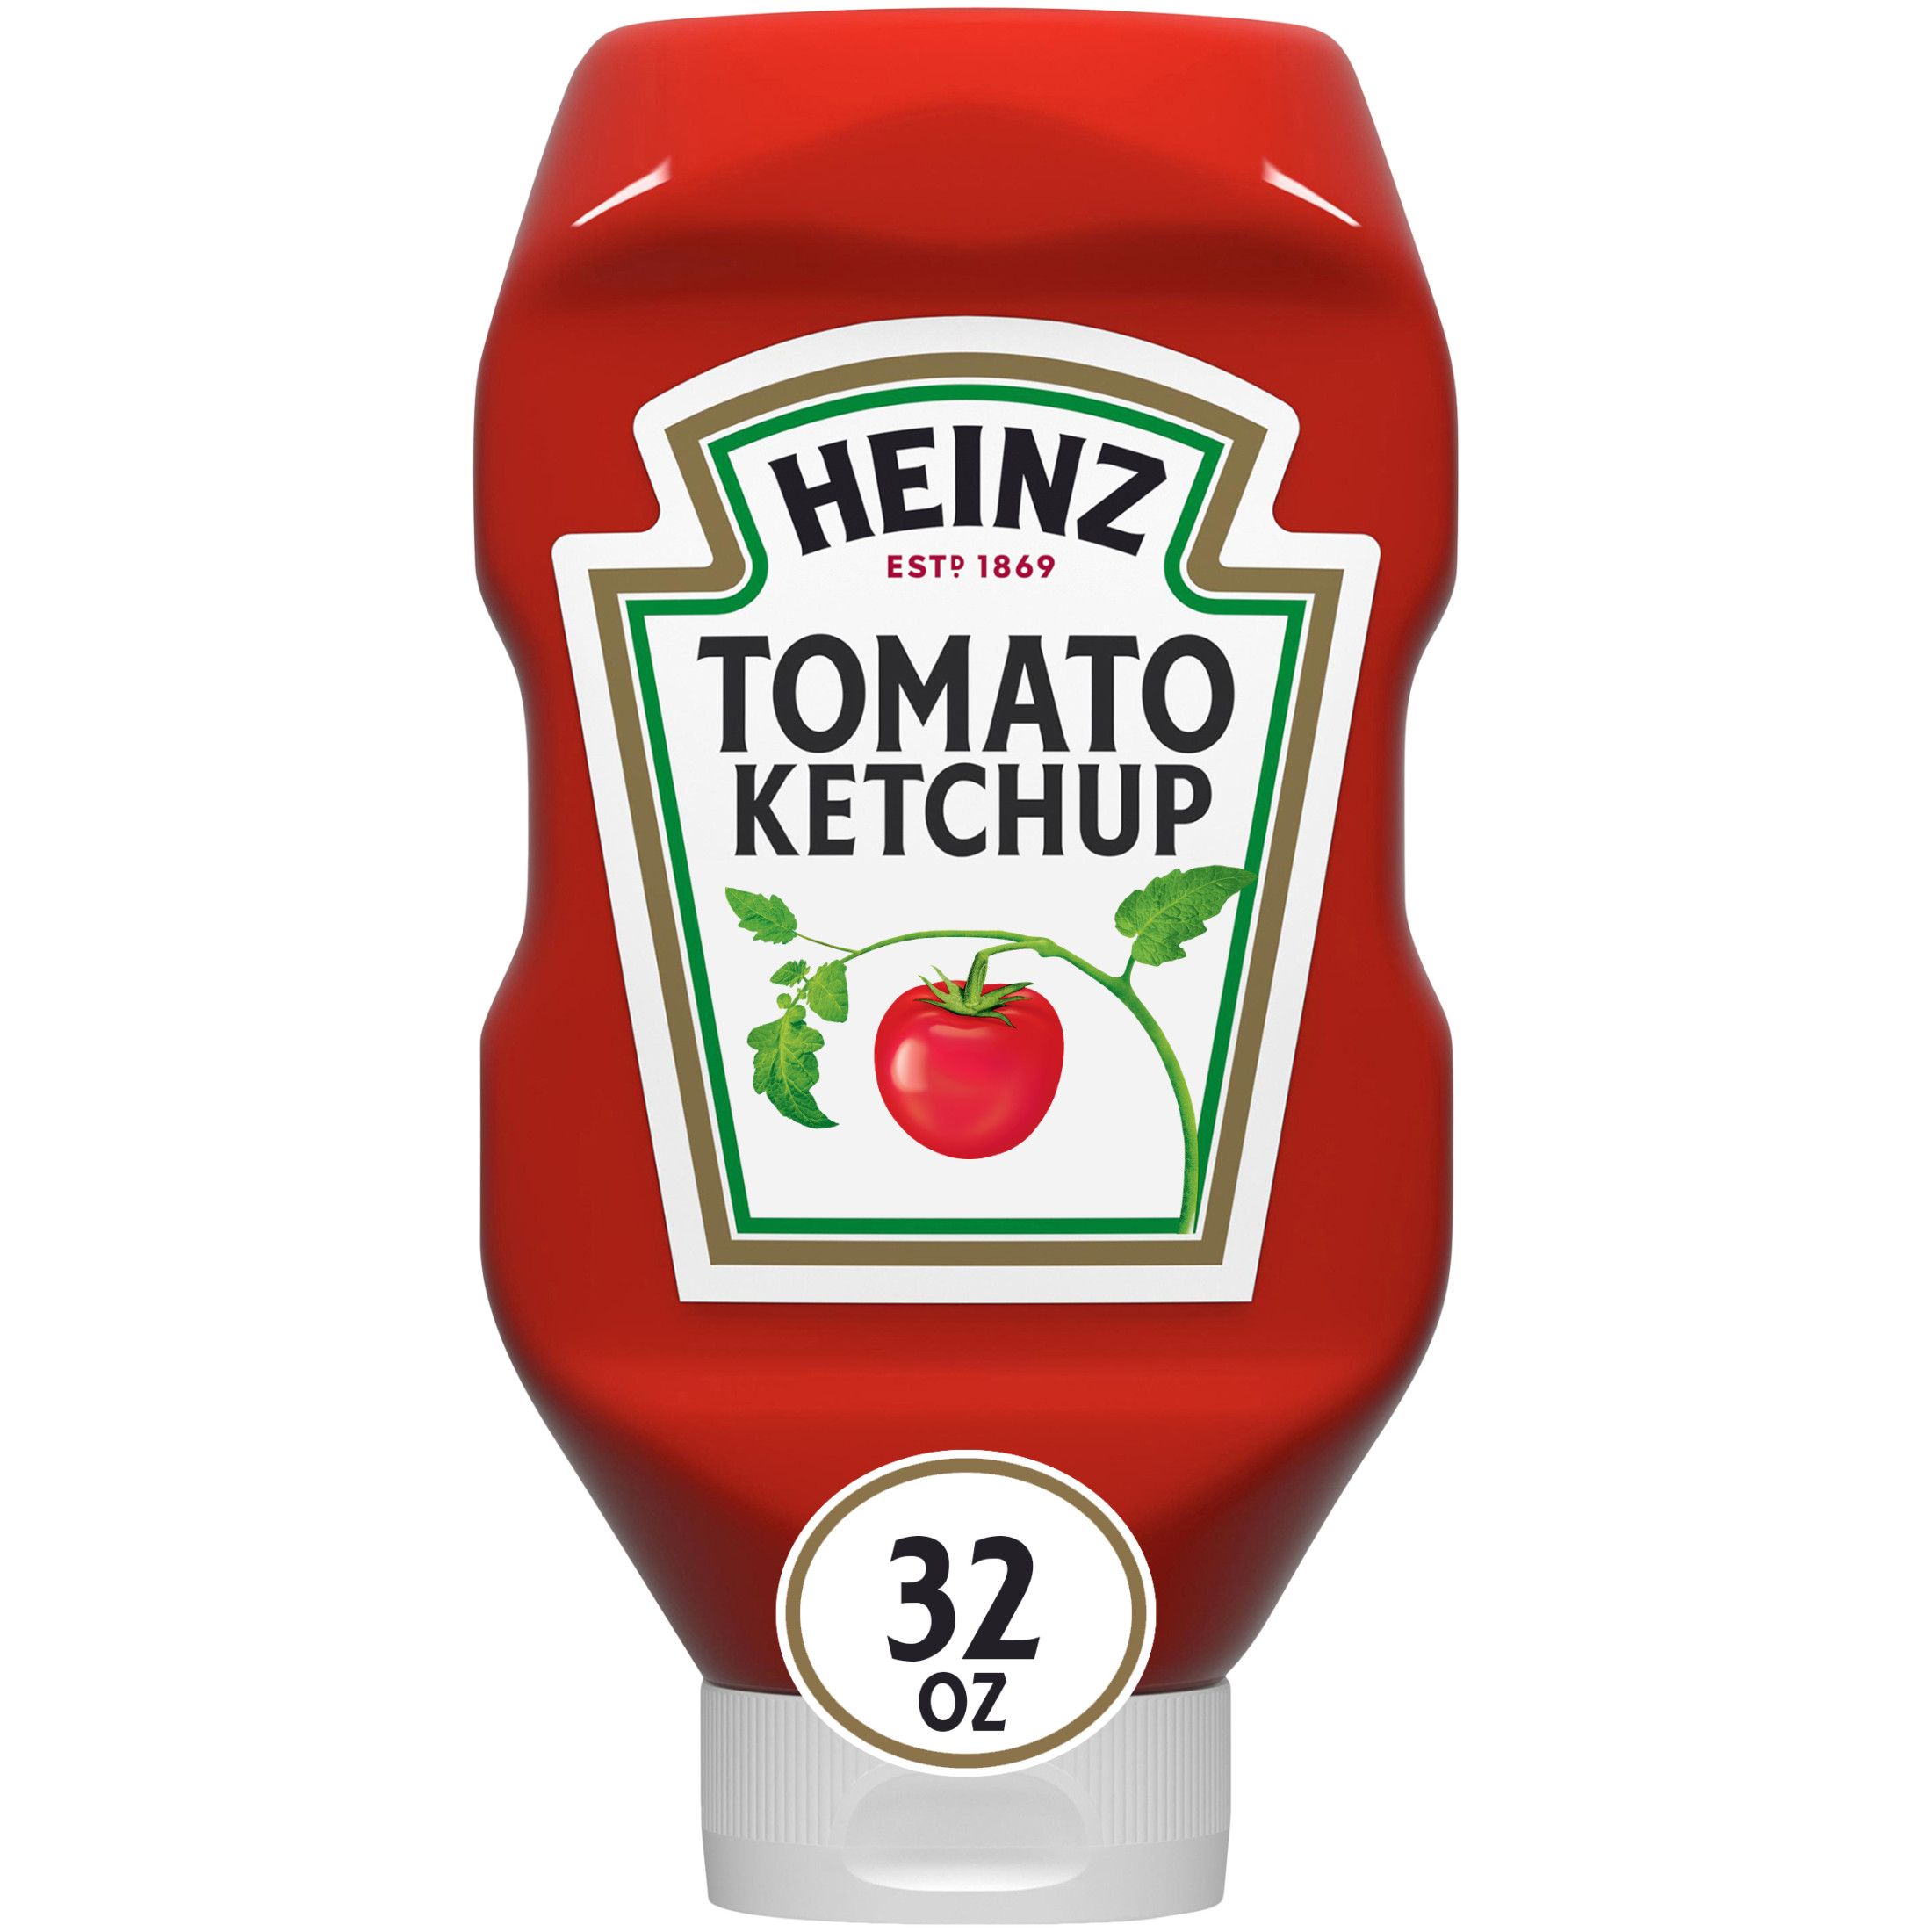 Heinz Tomato Ketchup, 32 oz Bottle - image 1 of 15